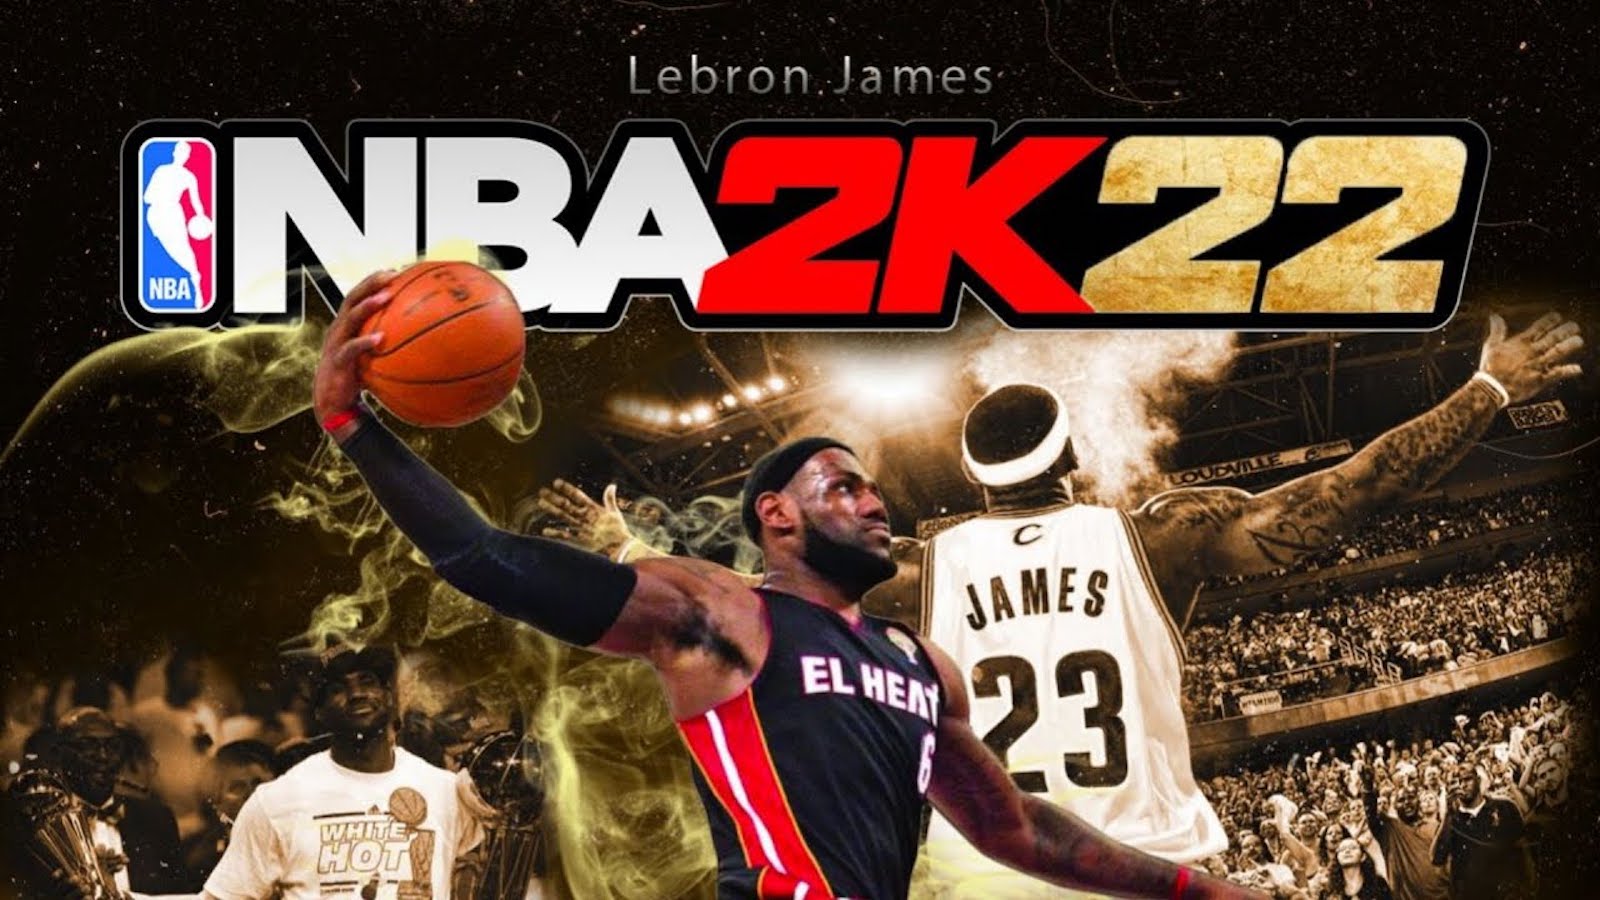 2 k games. NBA 2k22. NBA 2k22 PS. NBA 2k22 обложка. NBA 2k22 обложка игры.